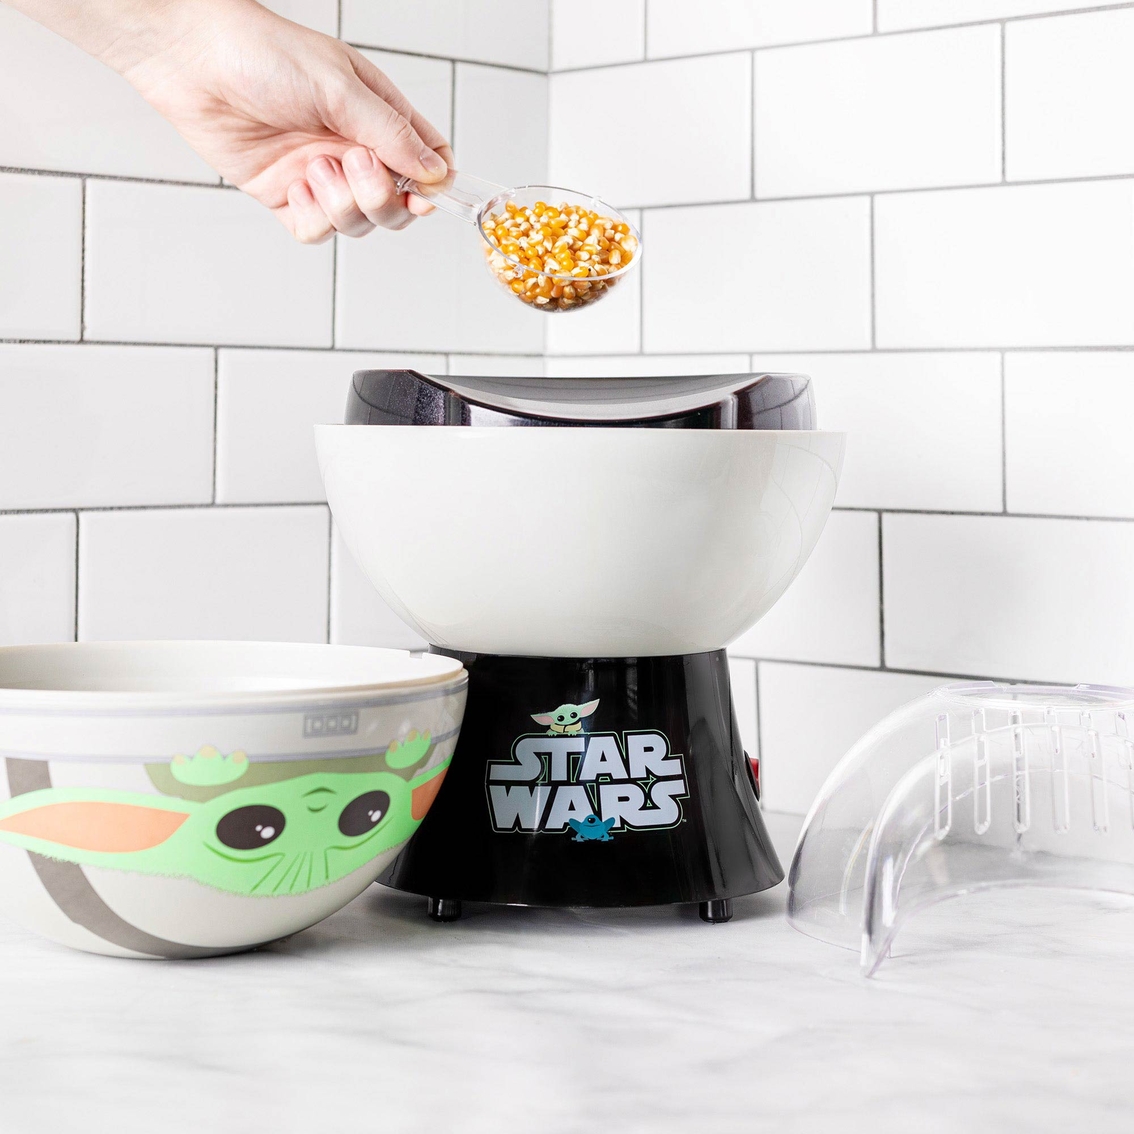 Star Wars The Child Popcorn Maker - Image 4 of 4